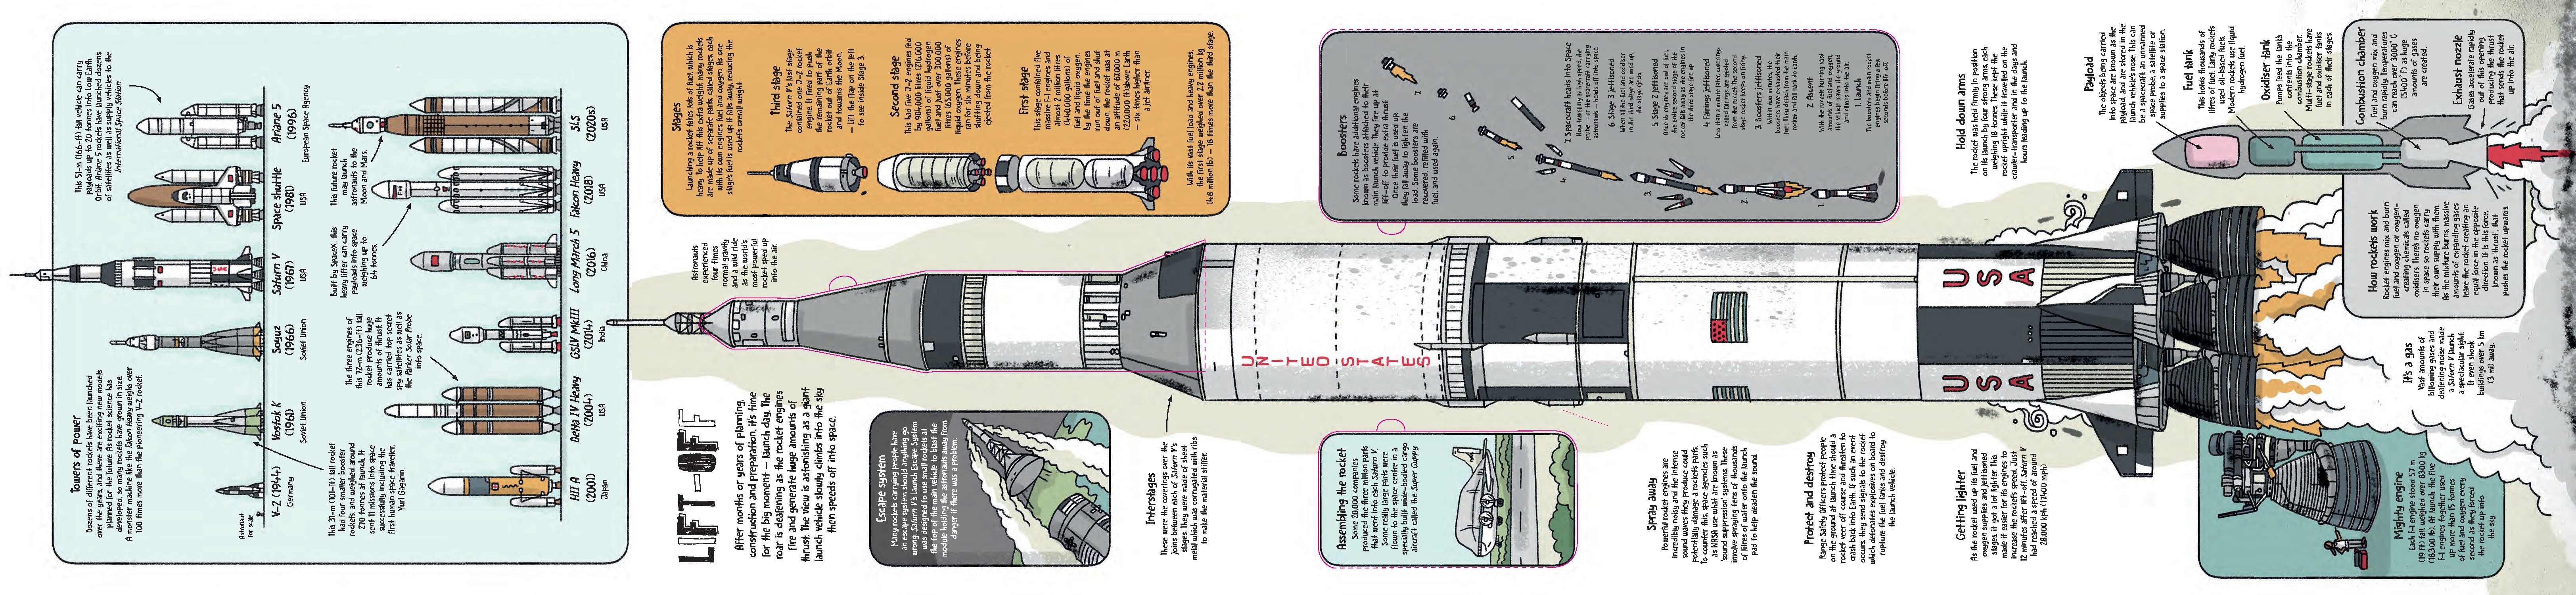 How Spaceships Work 1